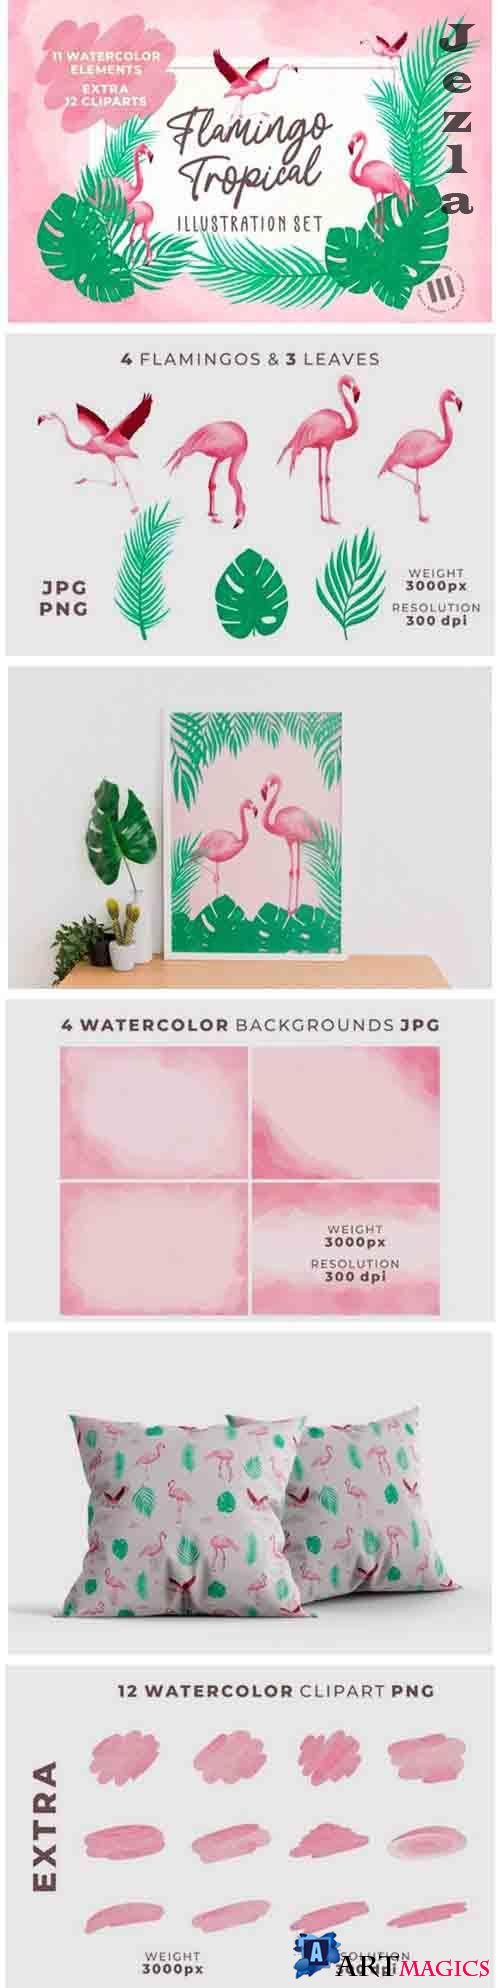 Flamingo Tropical Illustration Set